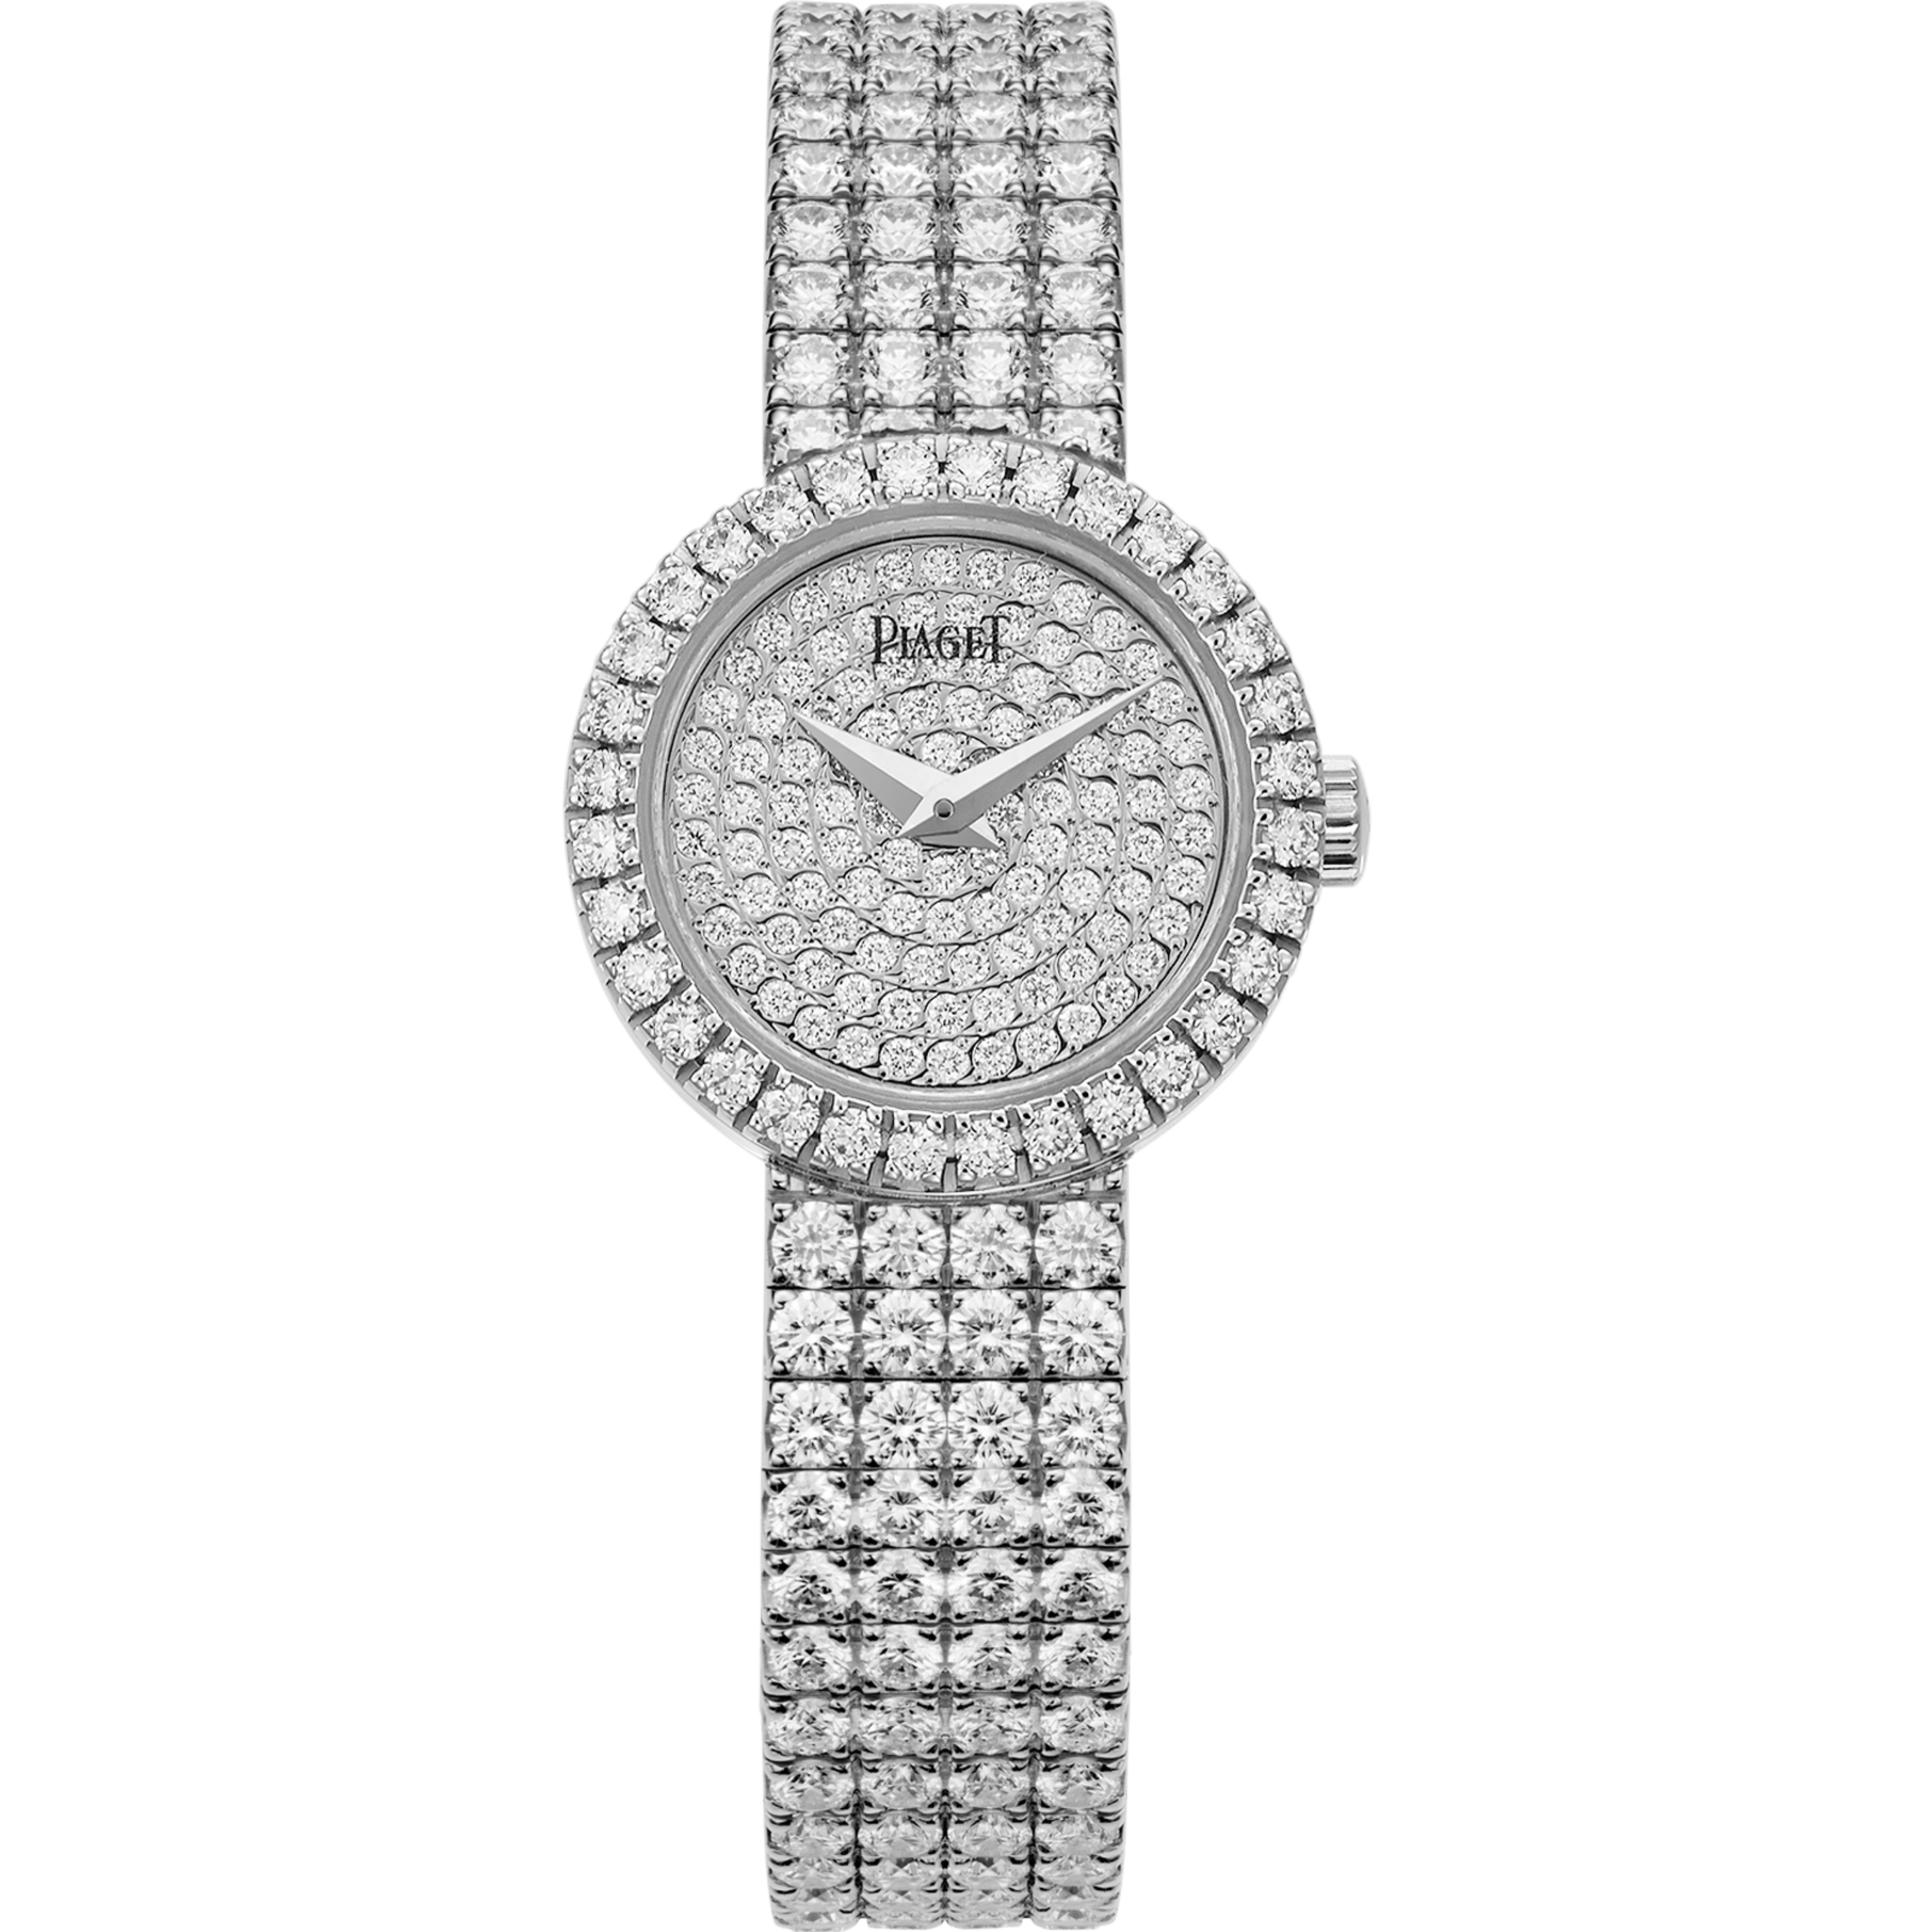 Piaget Diamond White Gold Watch G0A39047